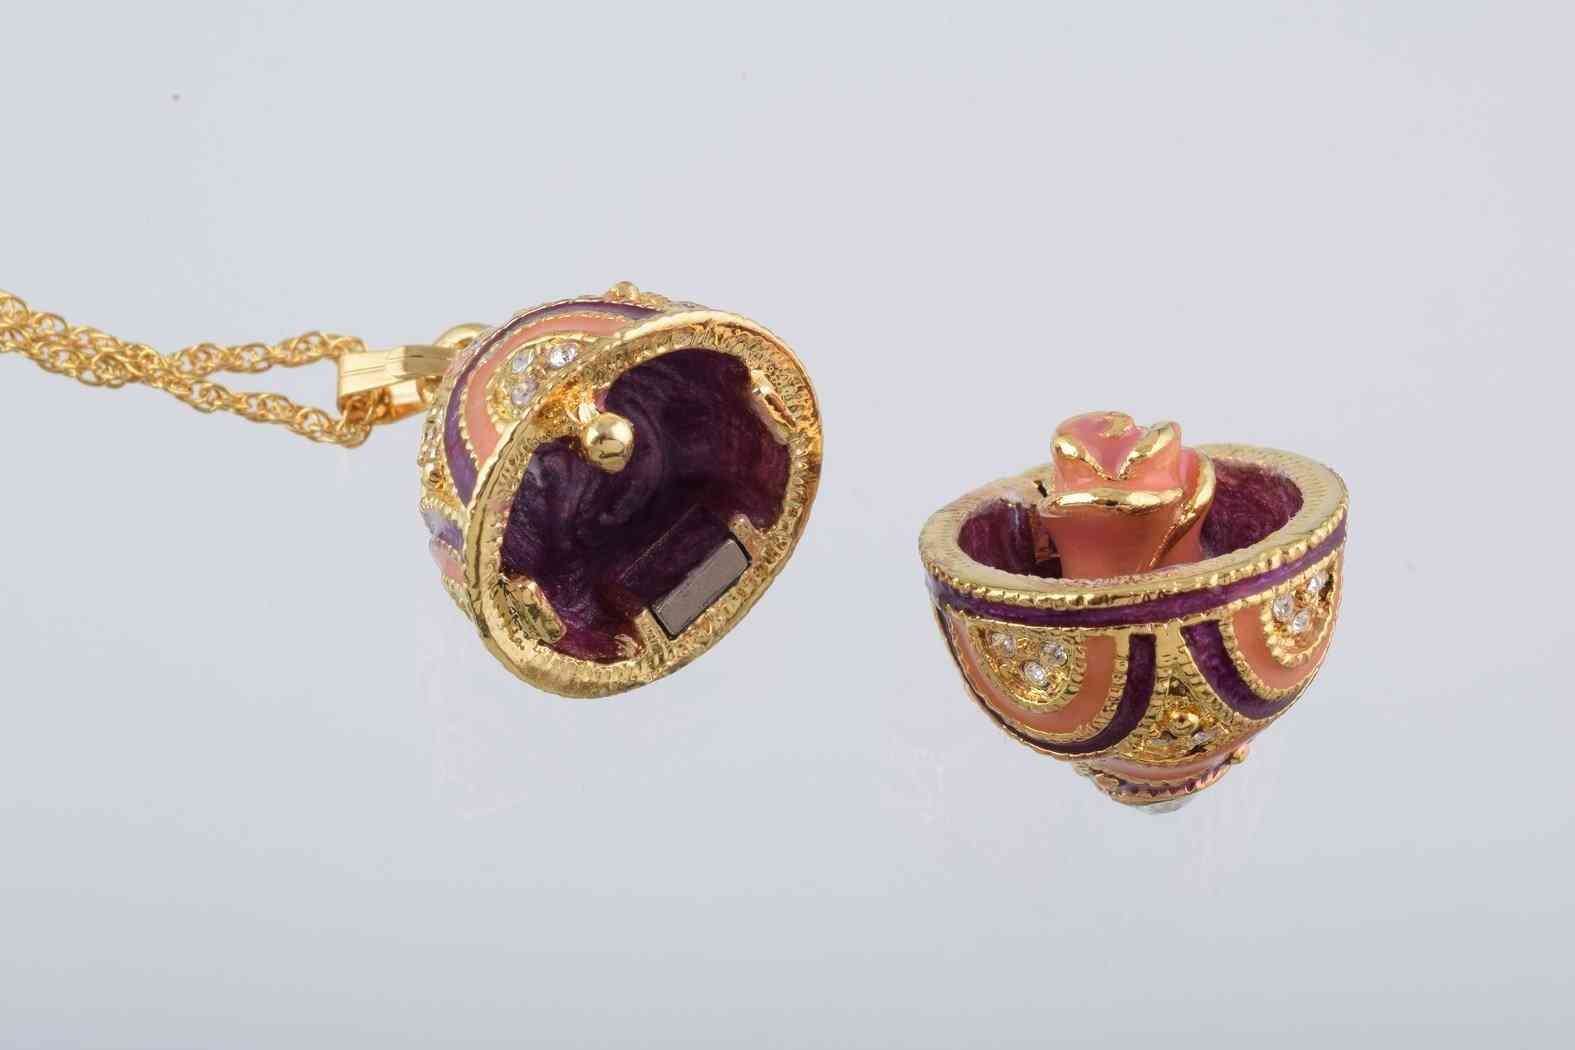 Purple & Peach Egg Pendant Necklace